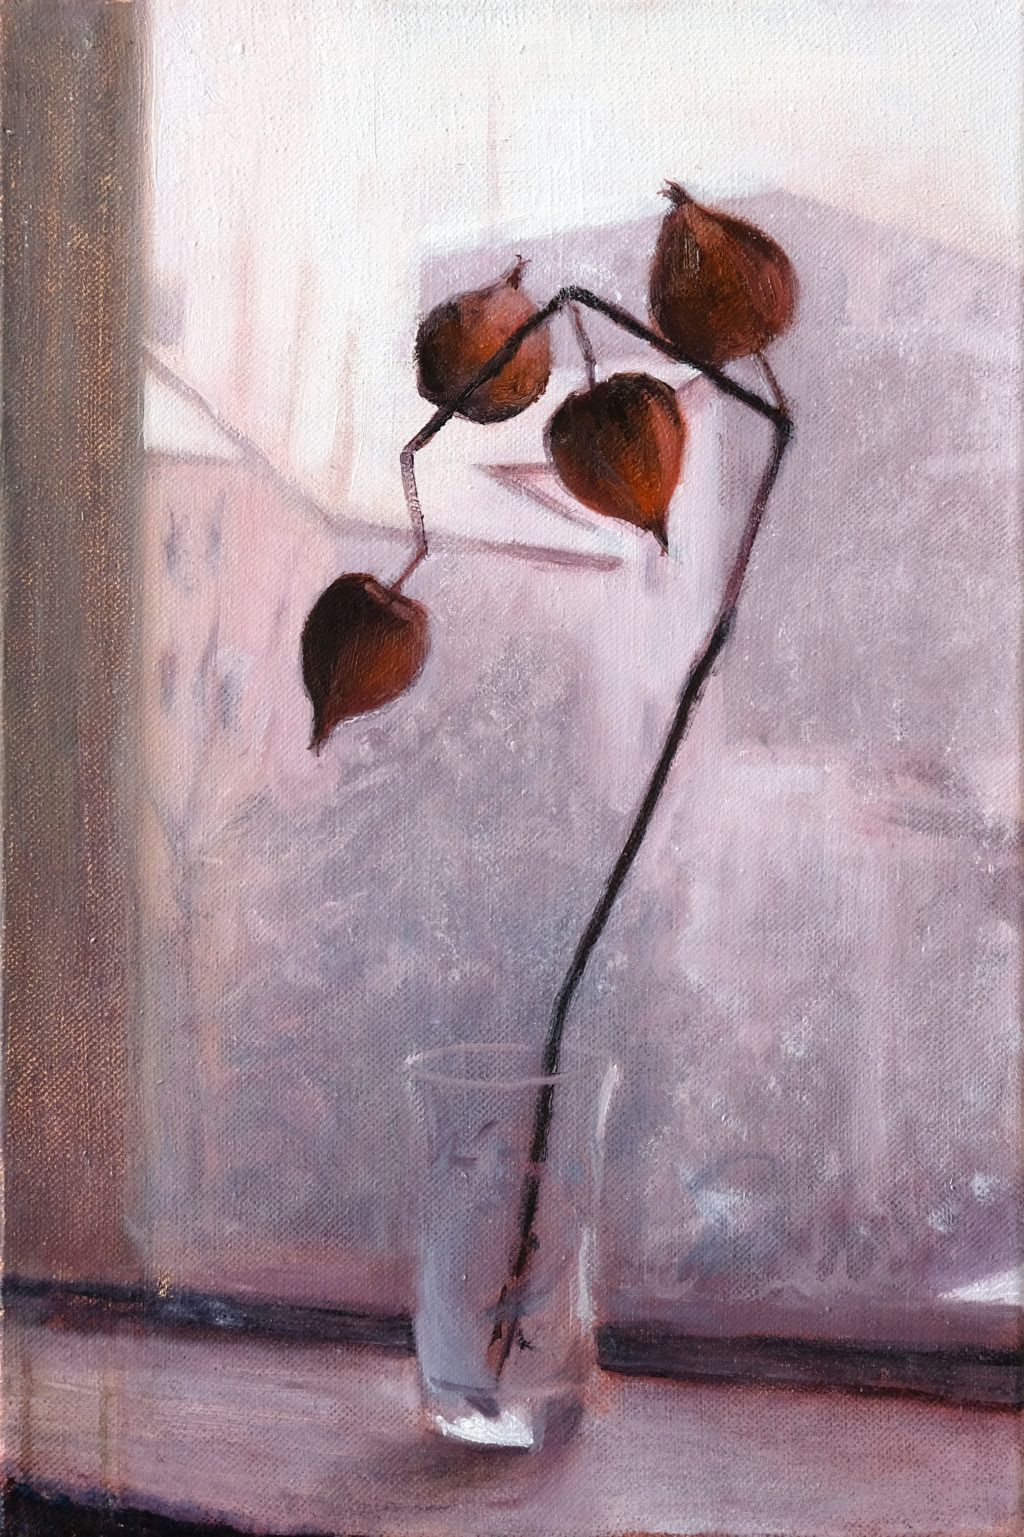 Andrea Muheim, Lampion II, 2021
Oil on canvas
45 x 30 cm